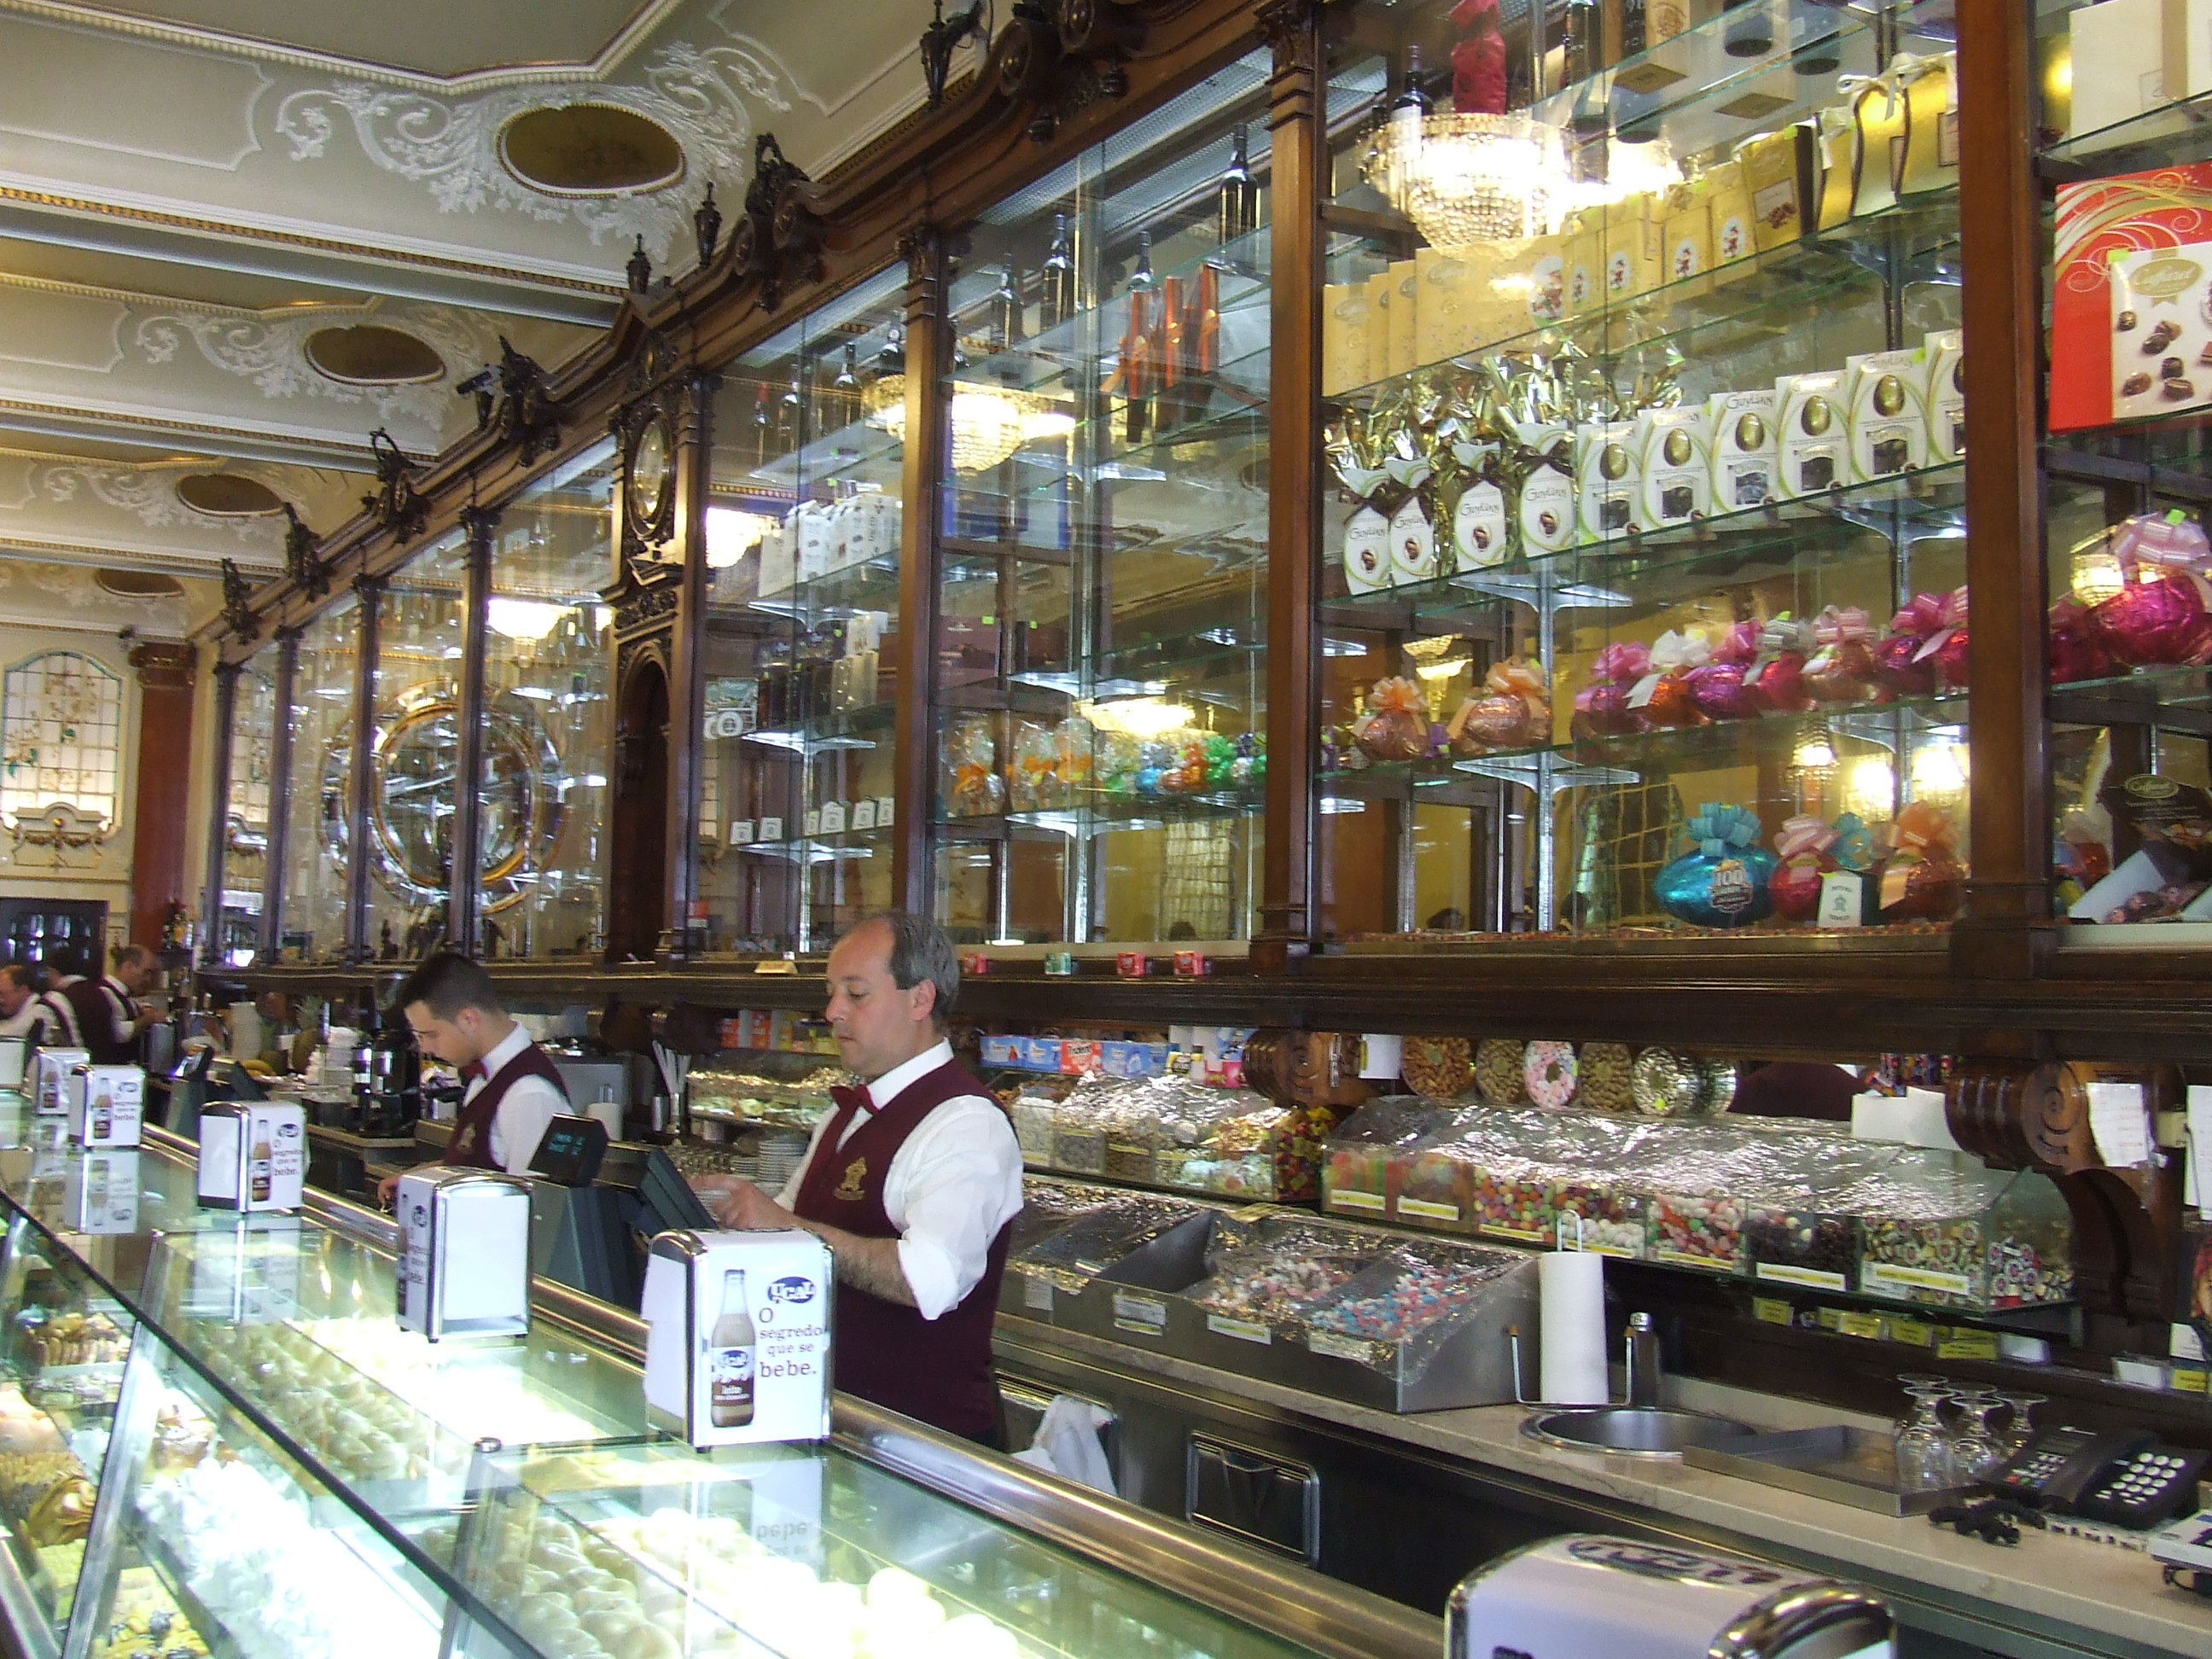 Cafés Lisboa